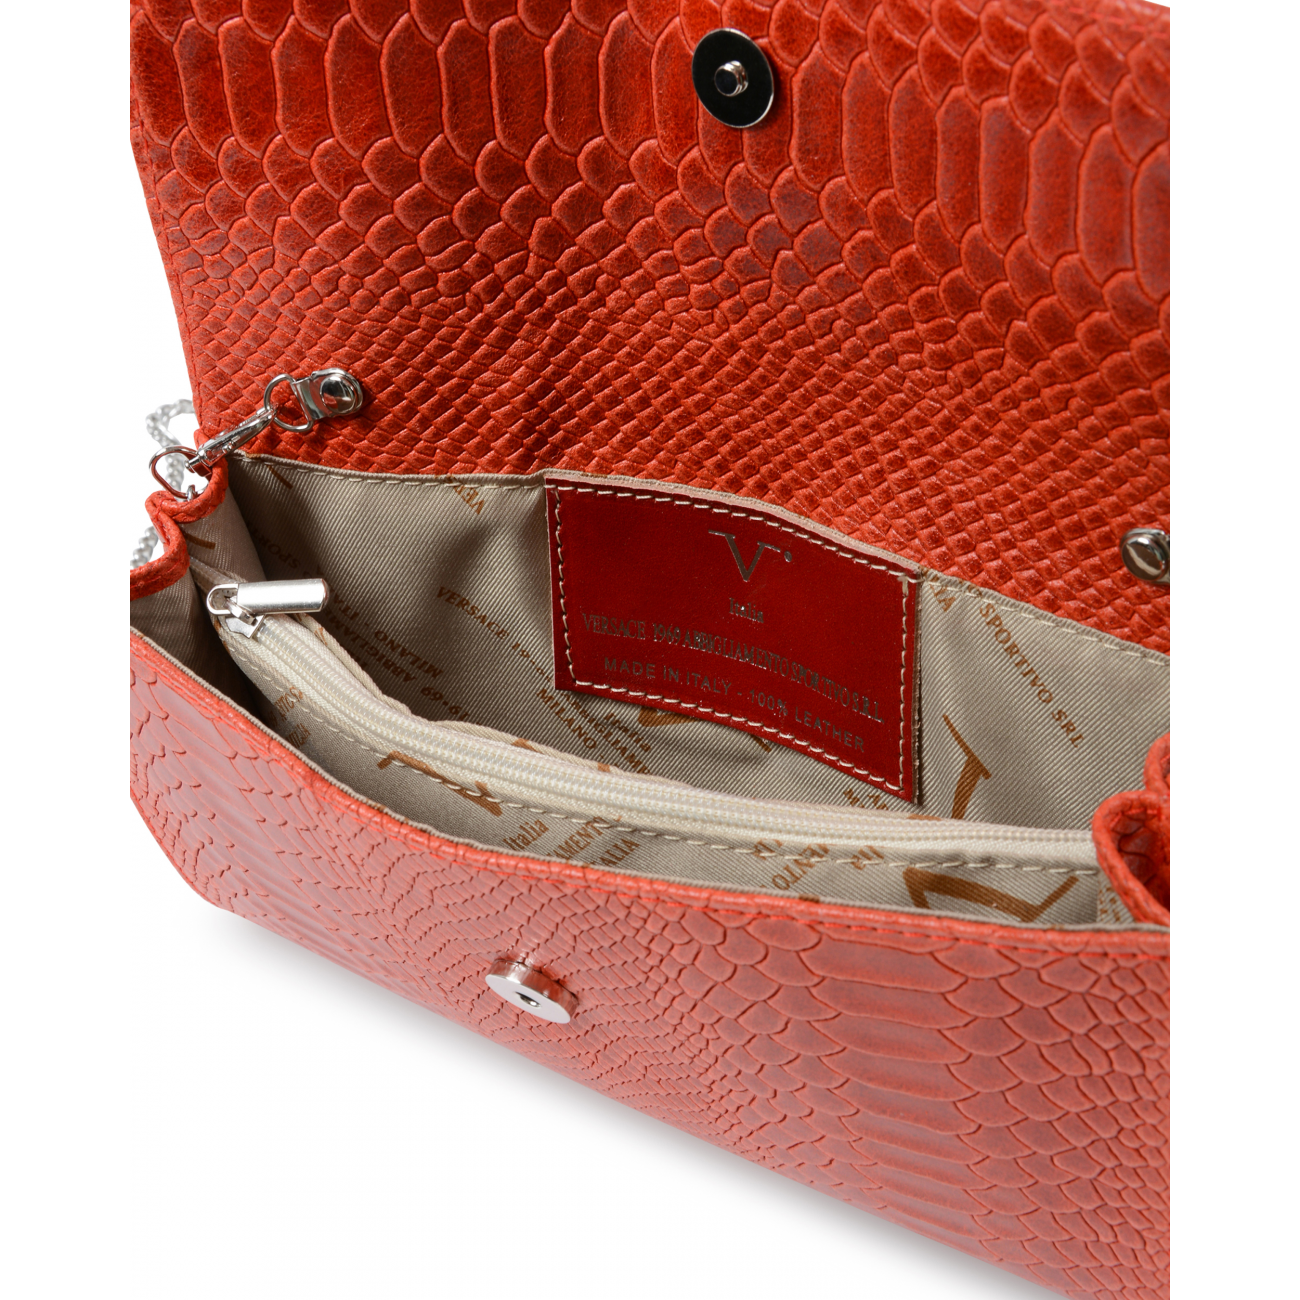 19V69 Italia Women's Shoulder Bag Red V1513 PITONE STAMPATO ROSSO